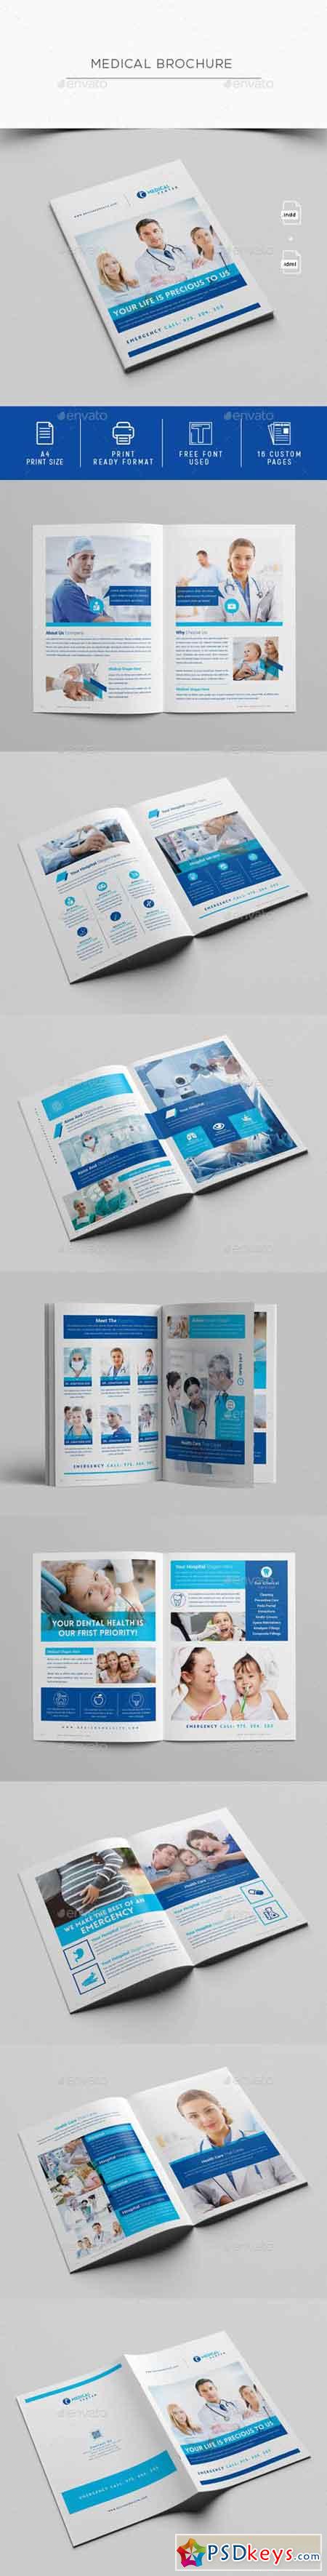 Medical Brochure Template 20786854